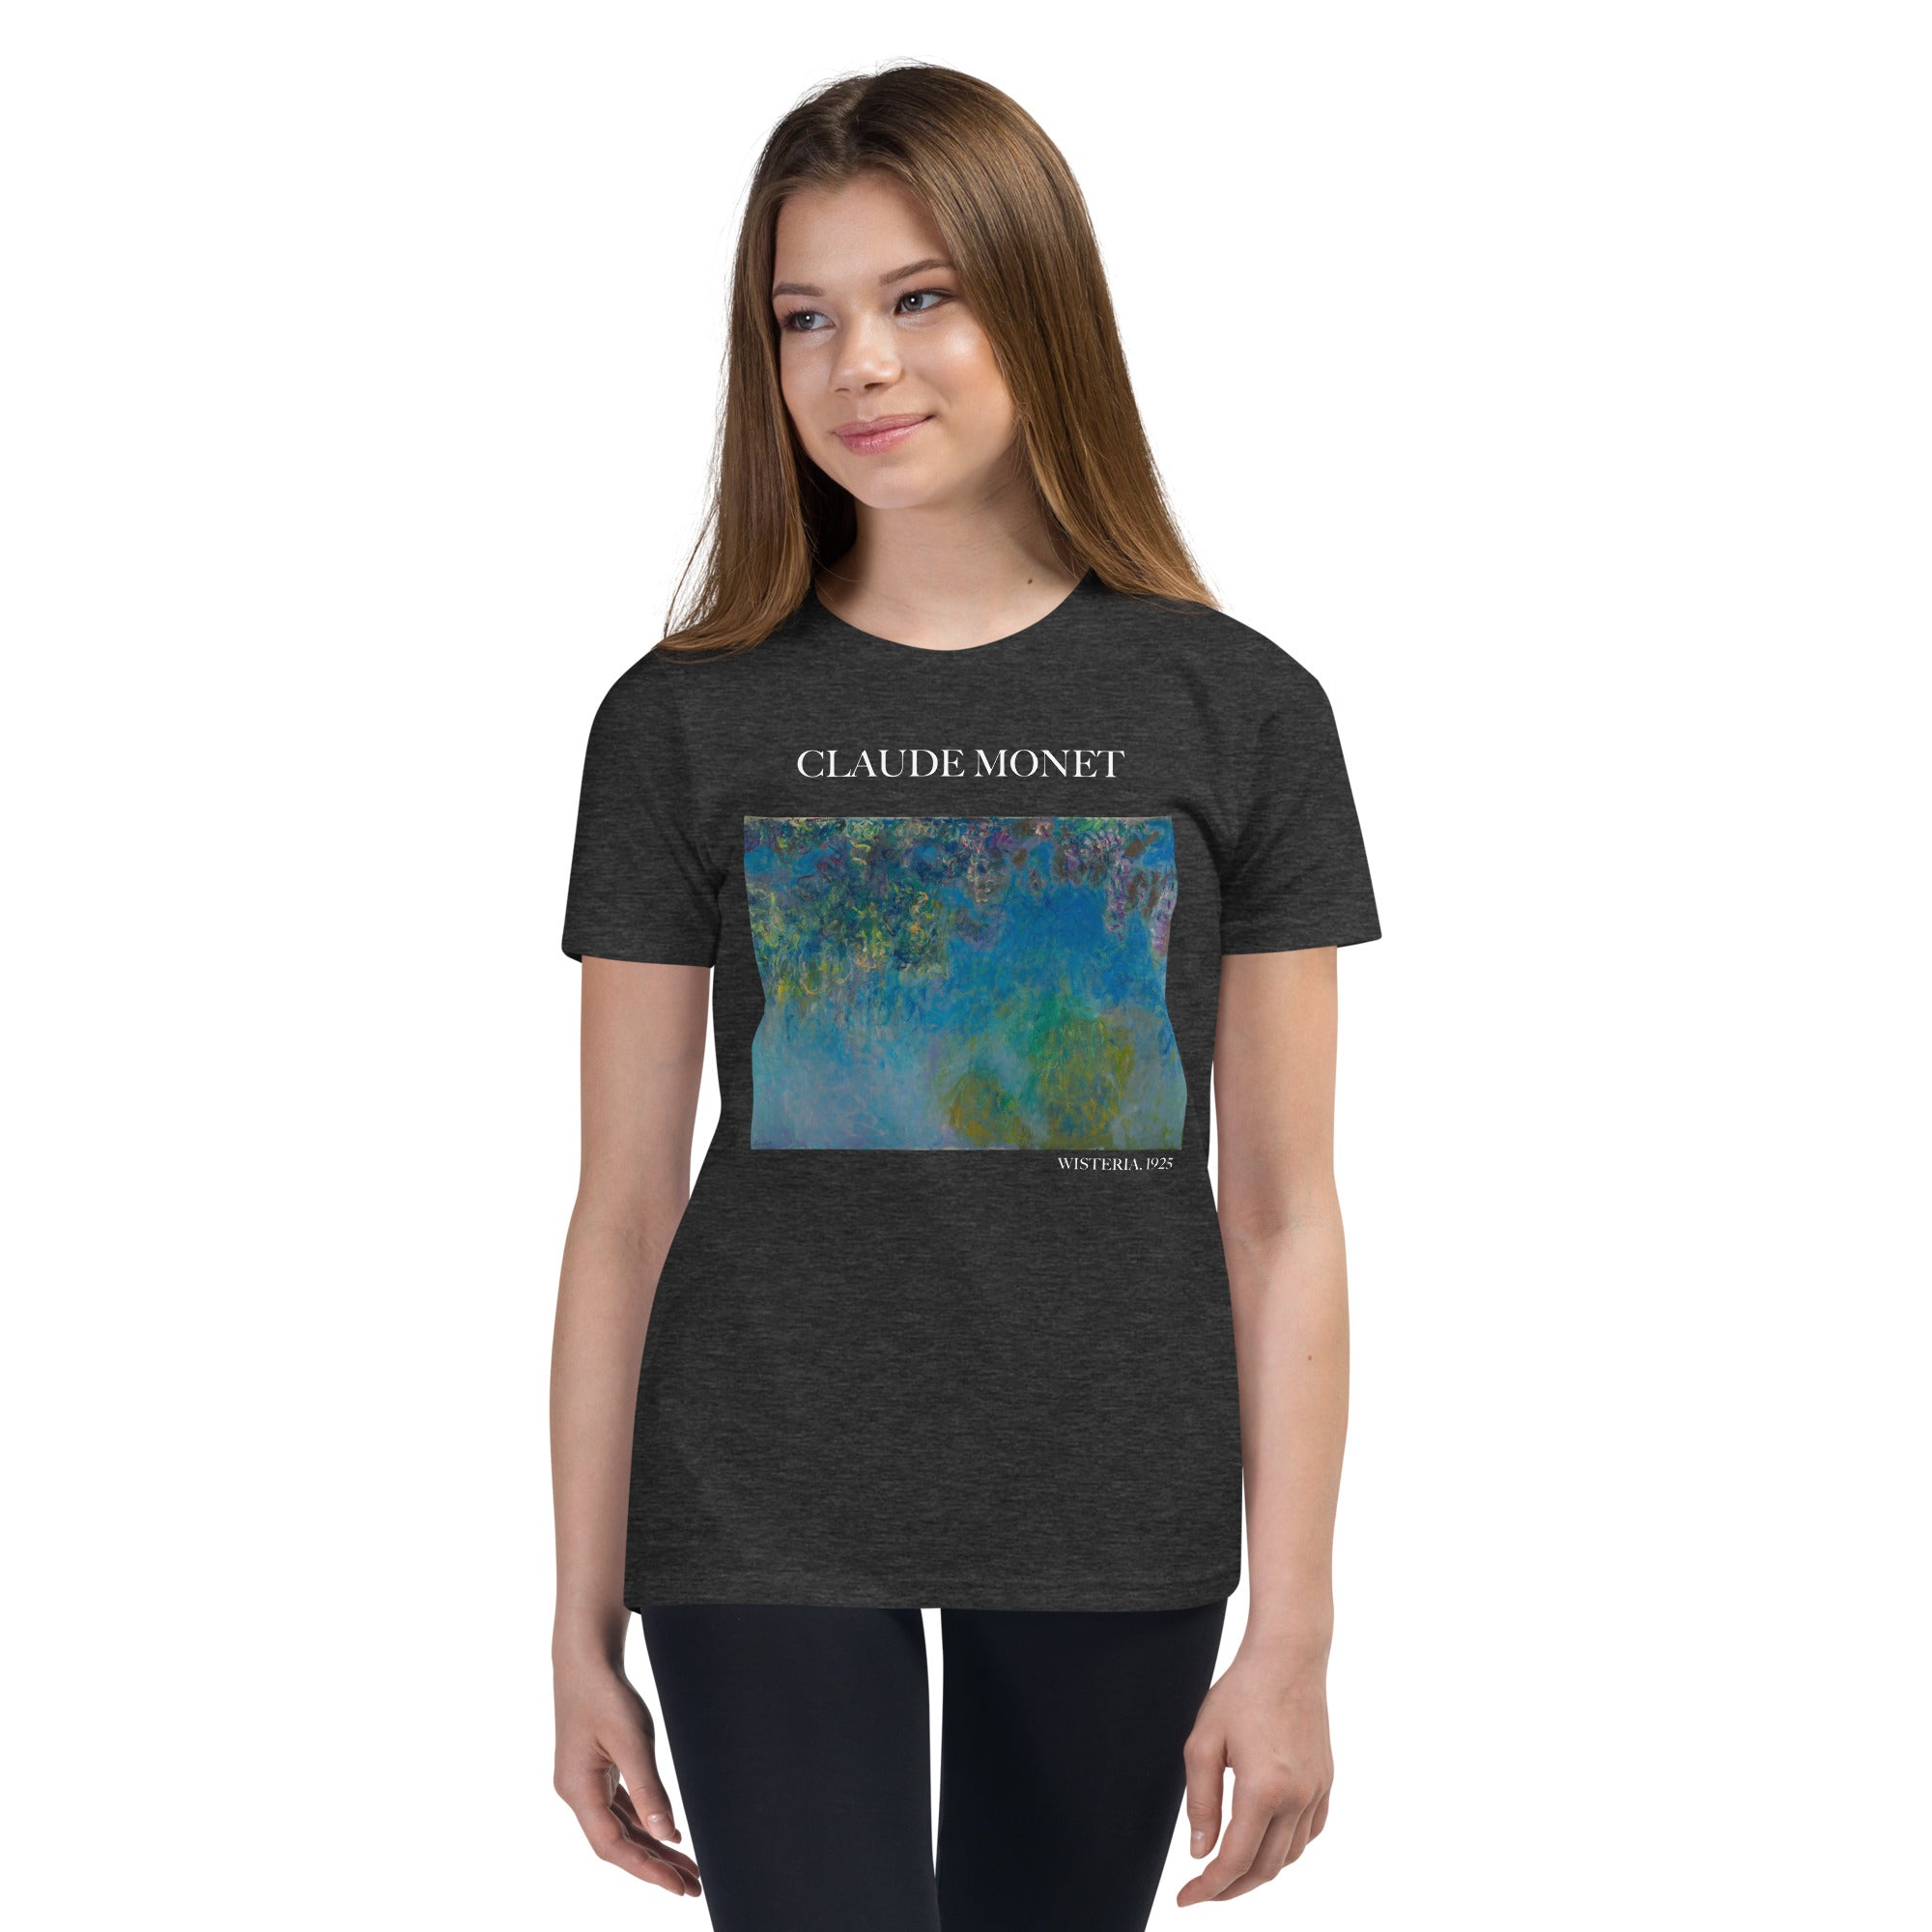 Claude Monet „Wisteria“ Berühmtes Gemälde Kurzärmeliges T-Shirt | Premium Jugend Art T-Shirt